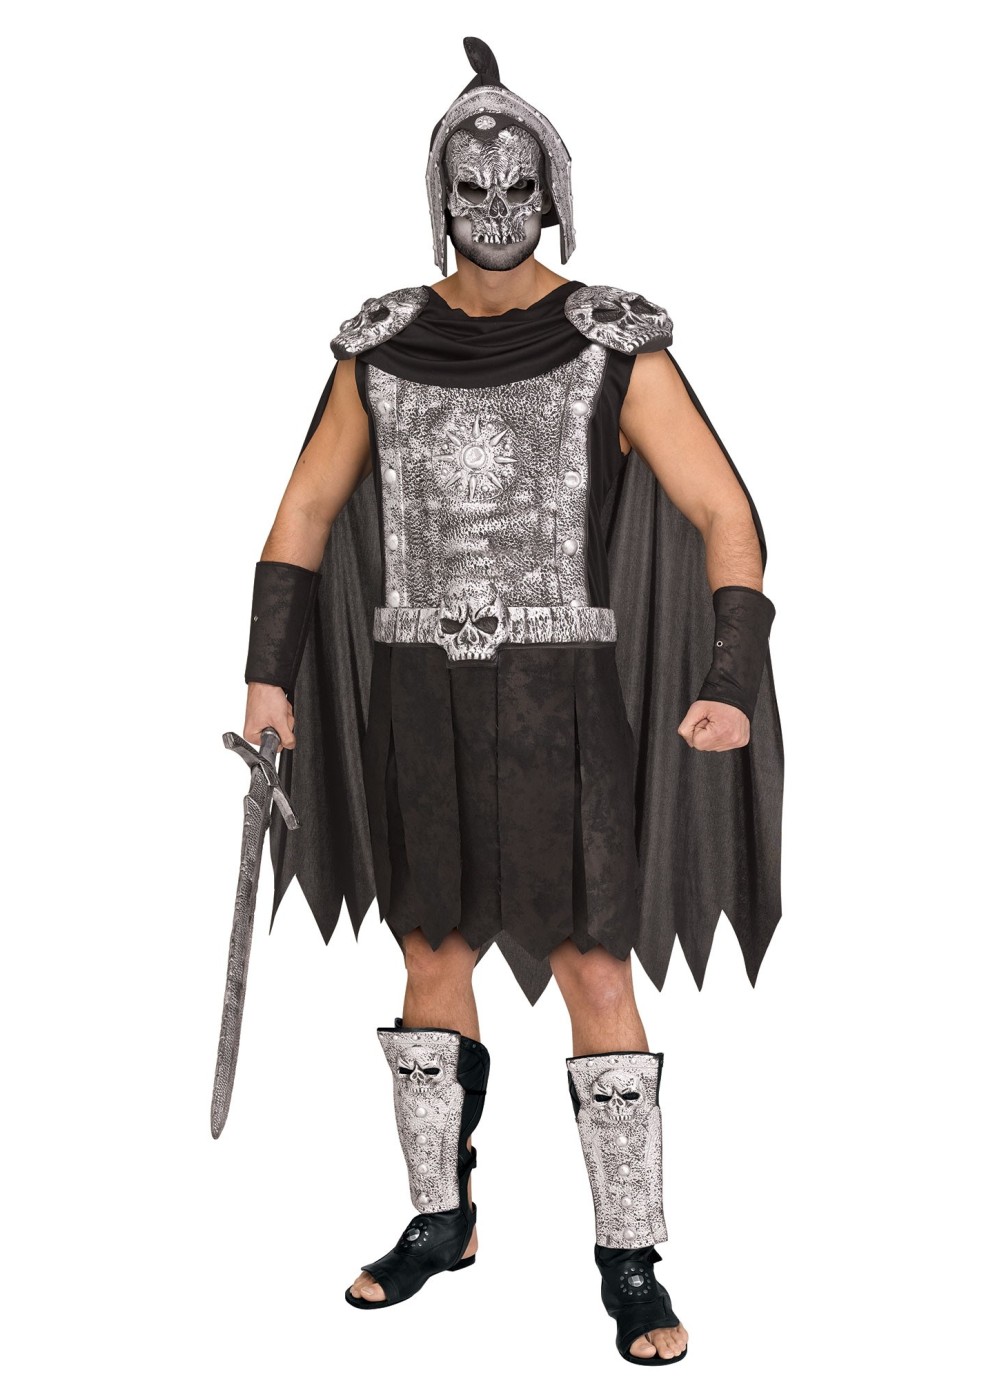 Skull Gladiator  Costume